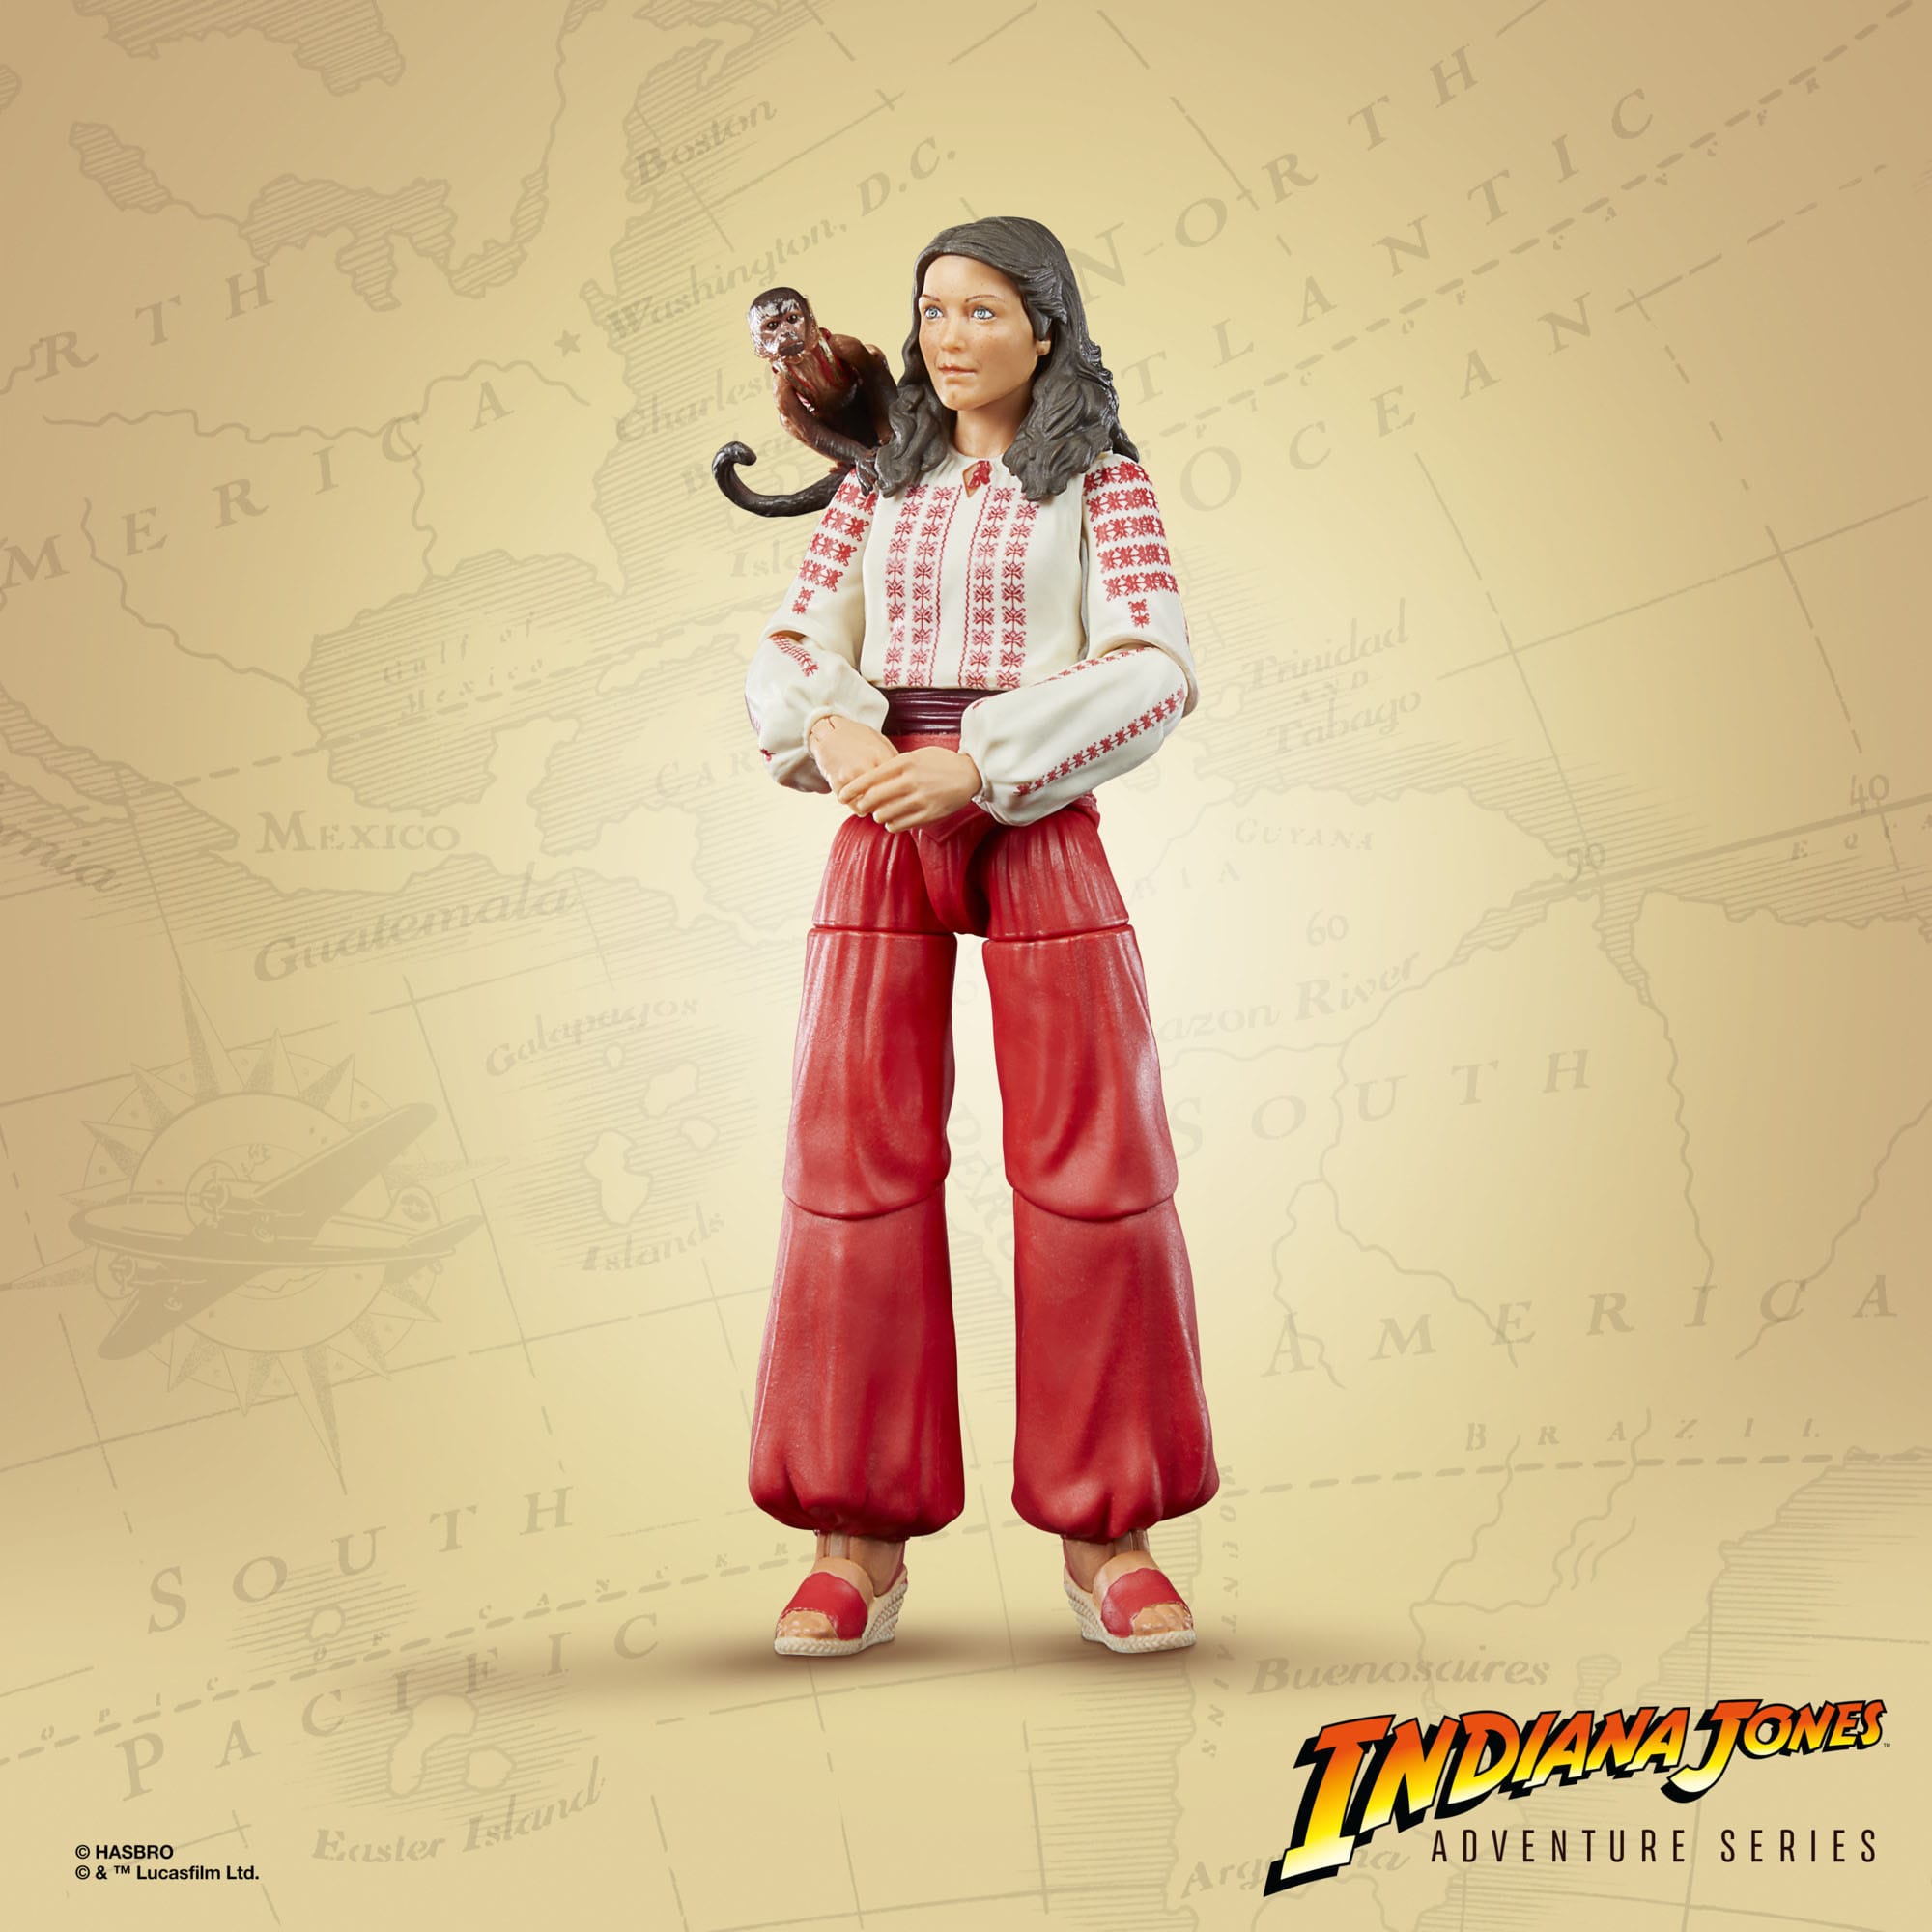 Indiana Jones Adventure Series Marion Ravenwood F60625X0 5010994164645